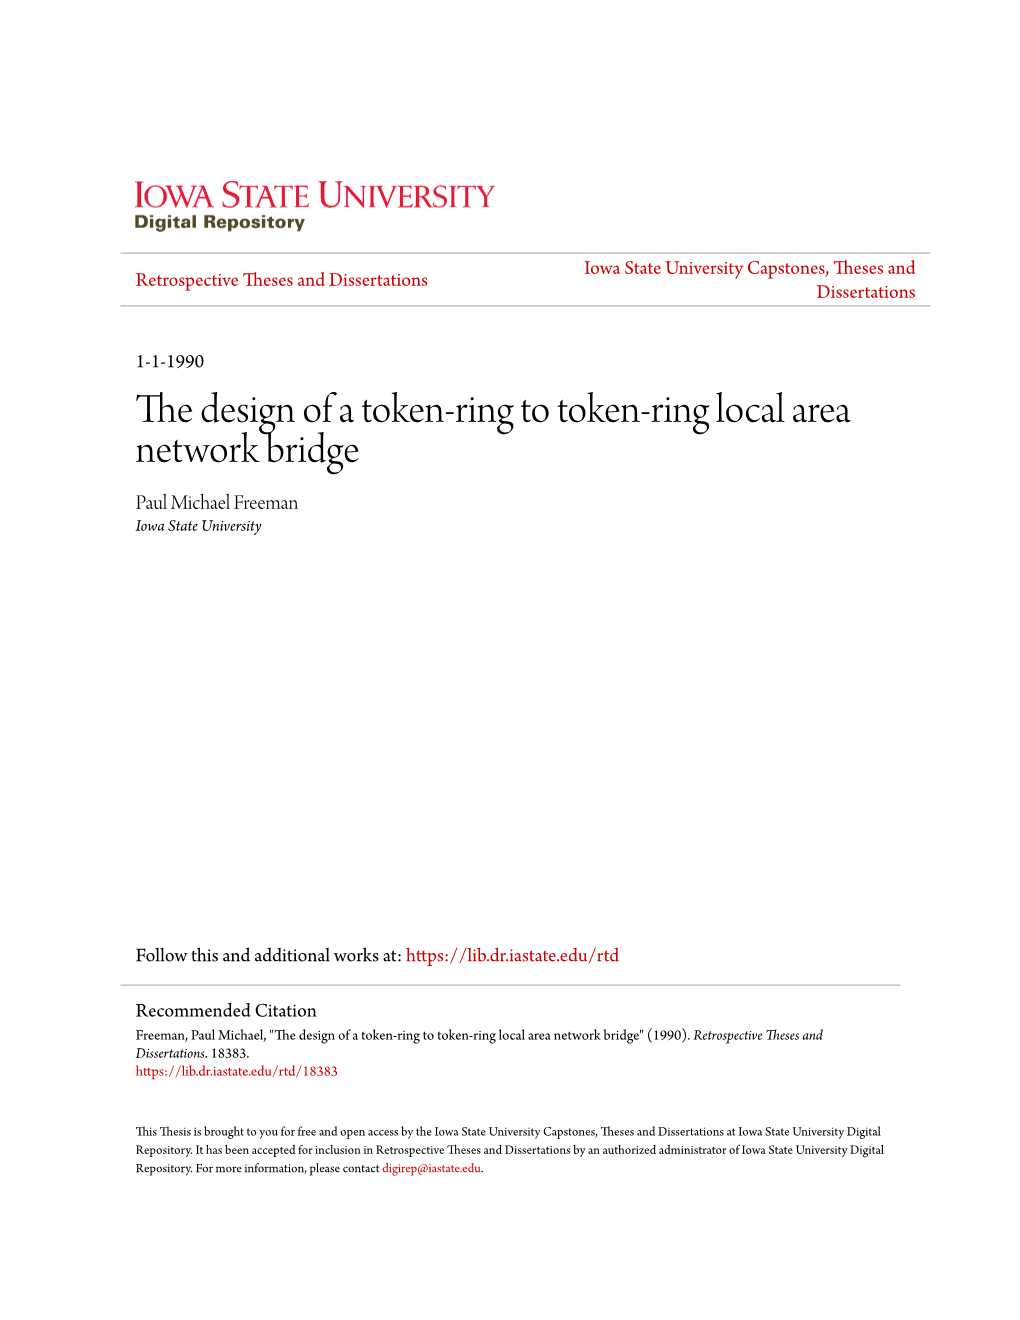 The Design of a Token-Ring to Token-Ring Local Area Network Bridge Paul Michael Freeman Iowa State University